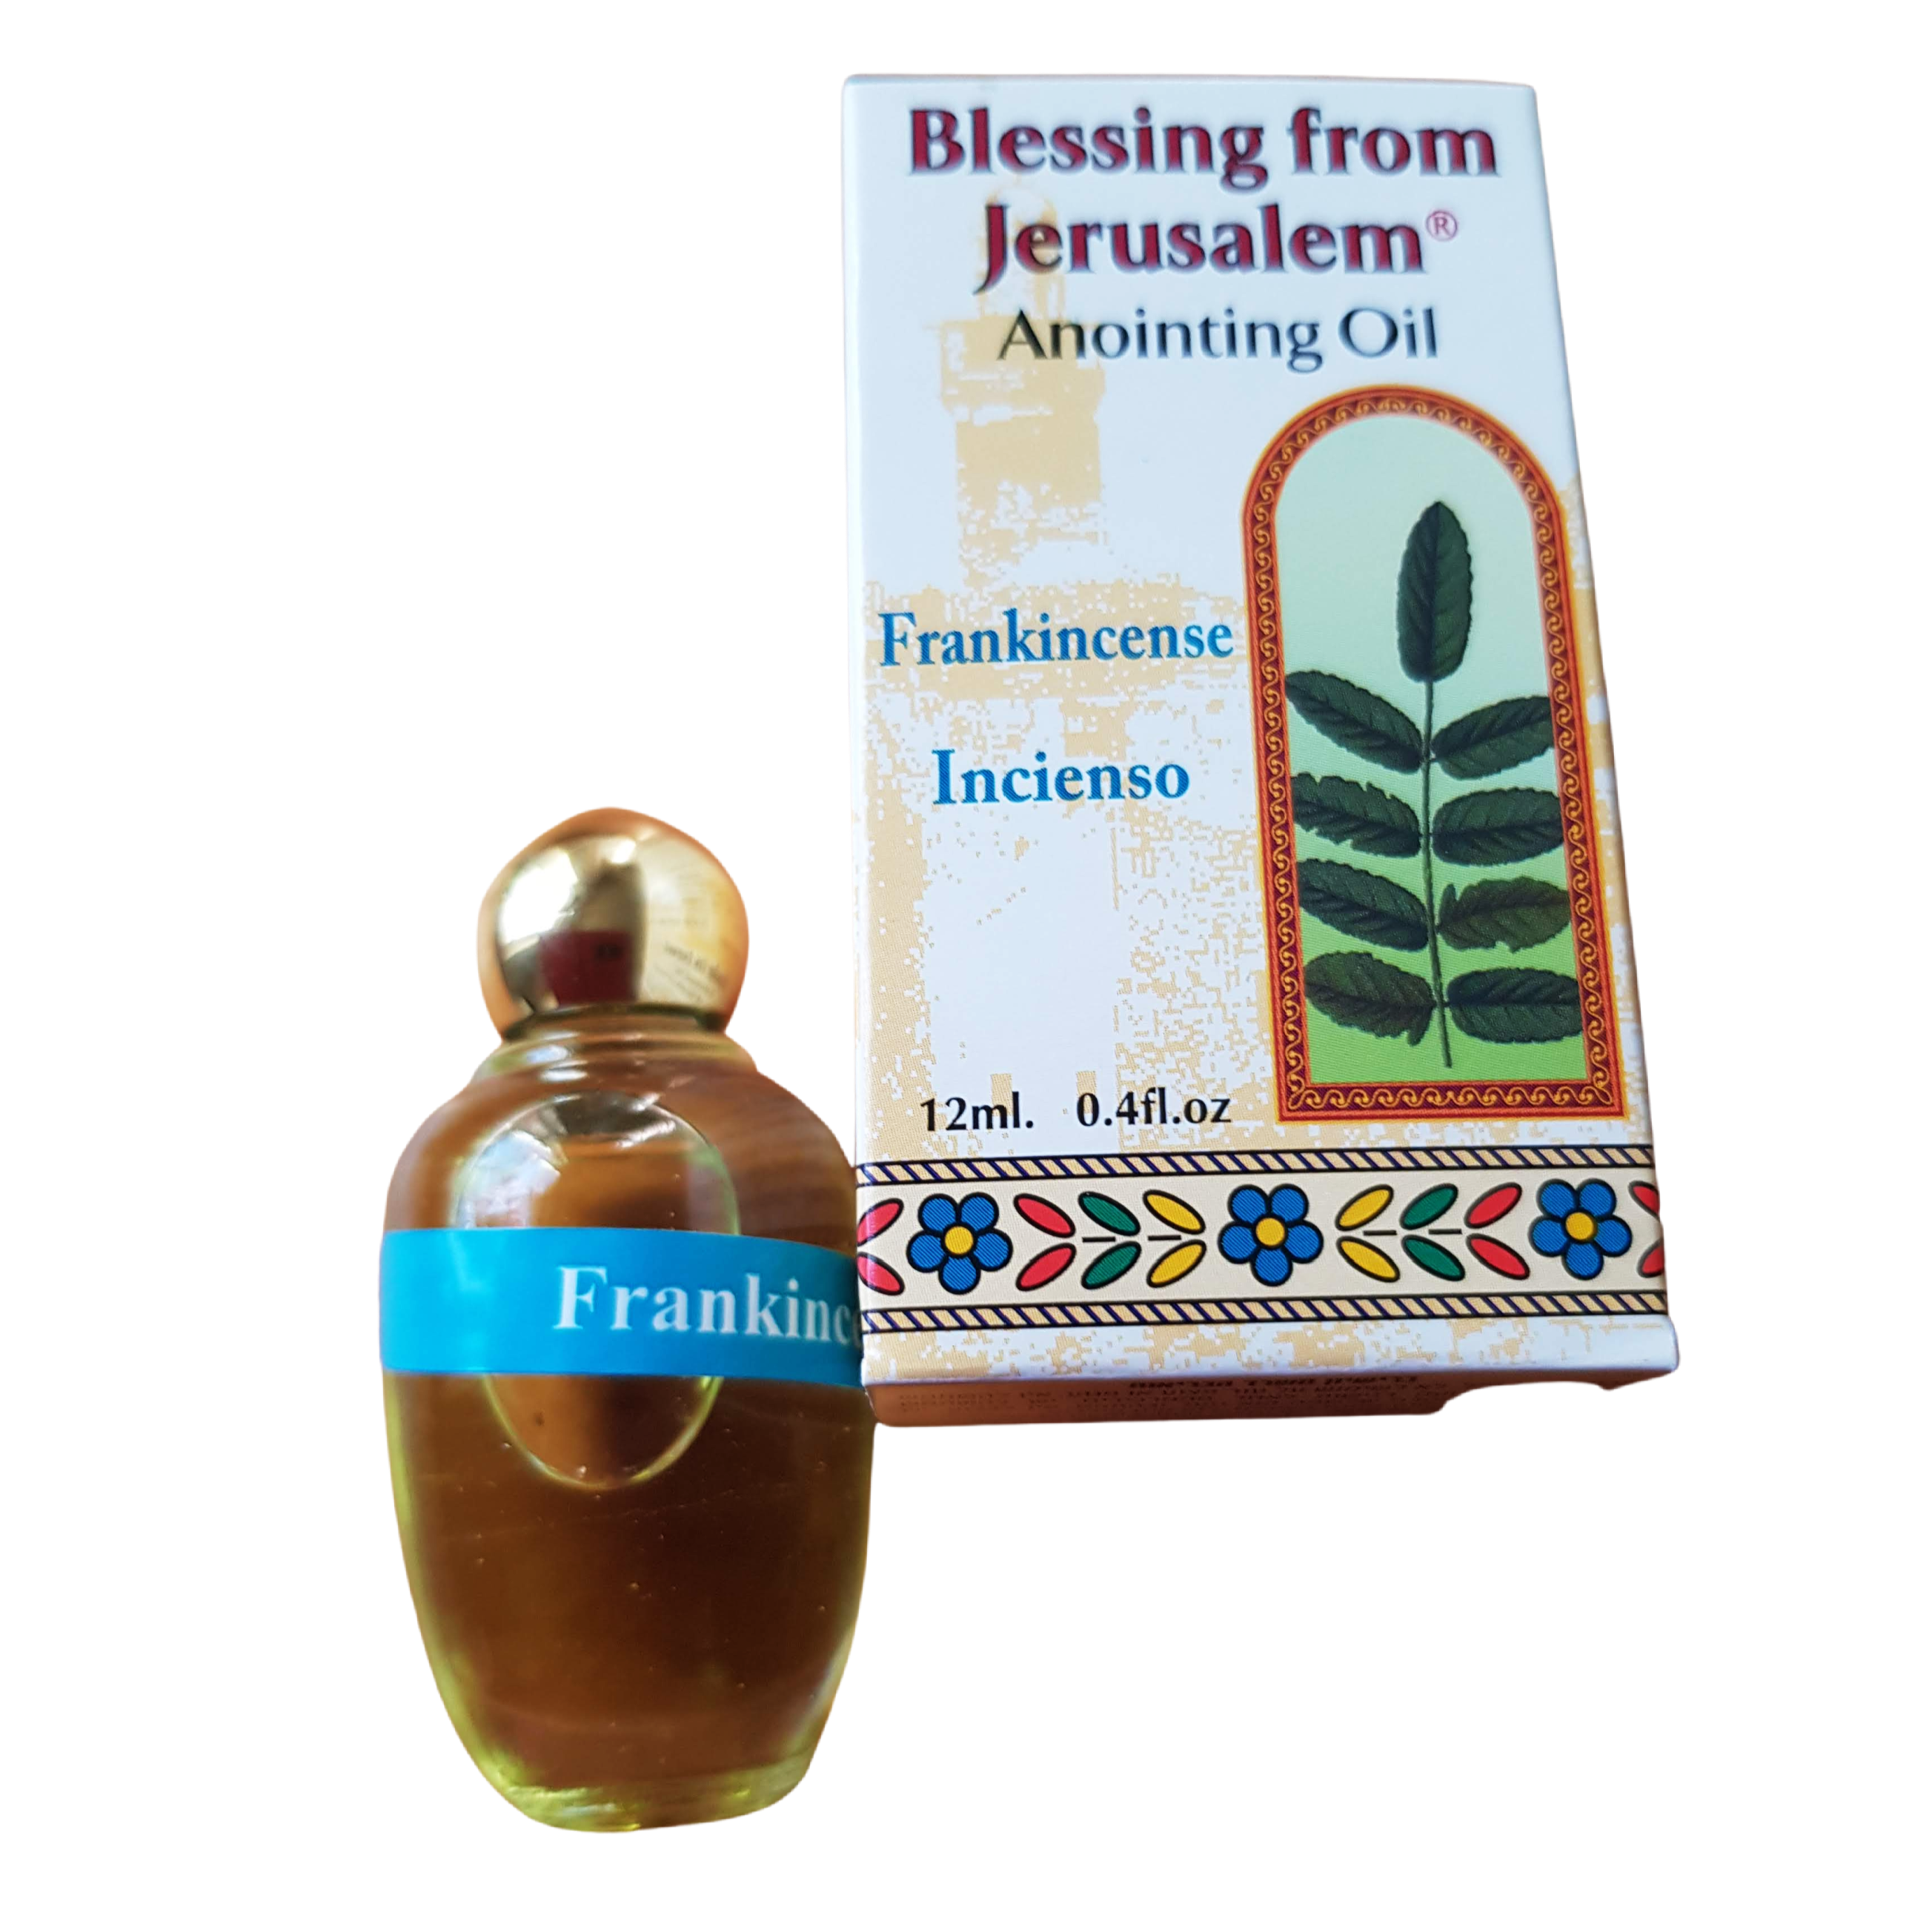 Anointing Oil Singapore, Frankincense, Myrrh, Cinnamon, Holy